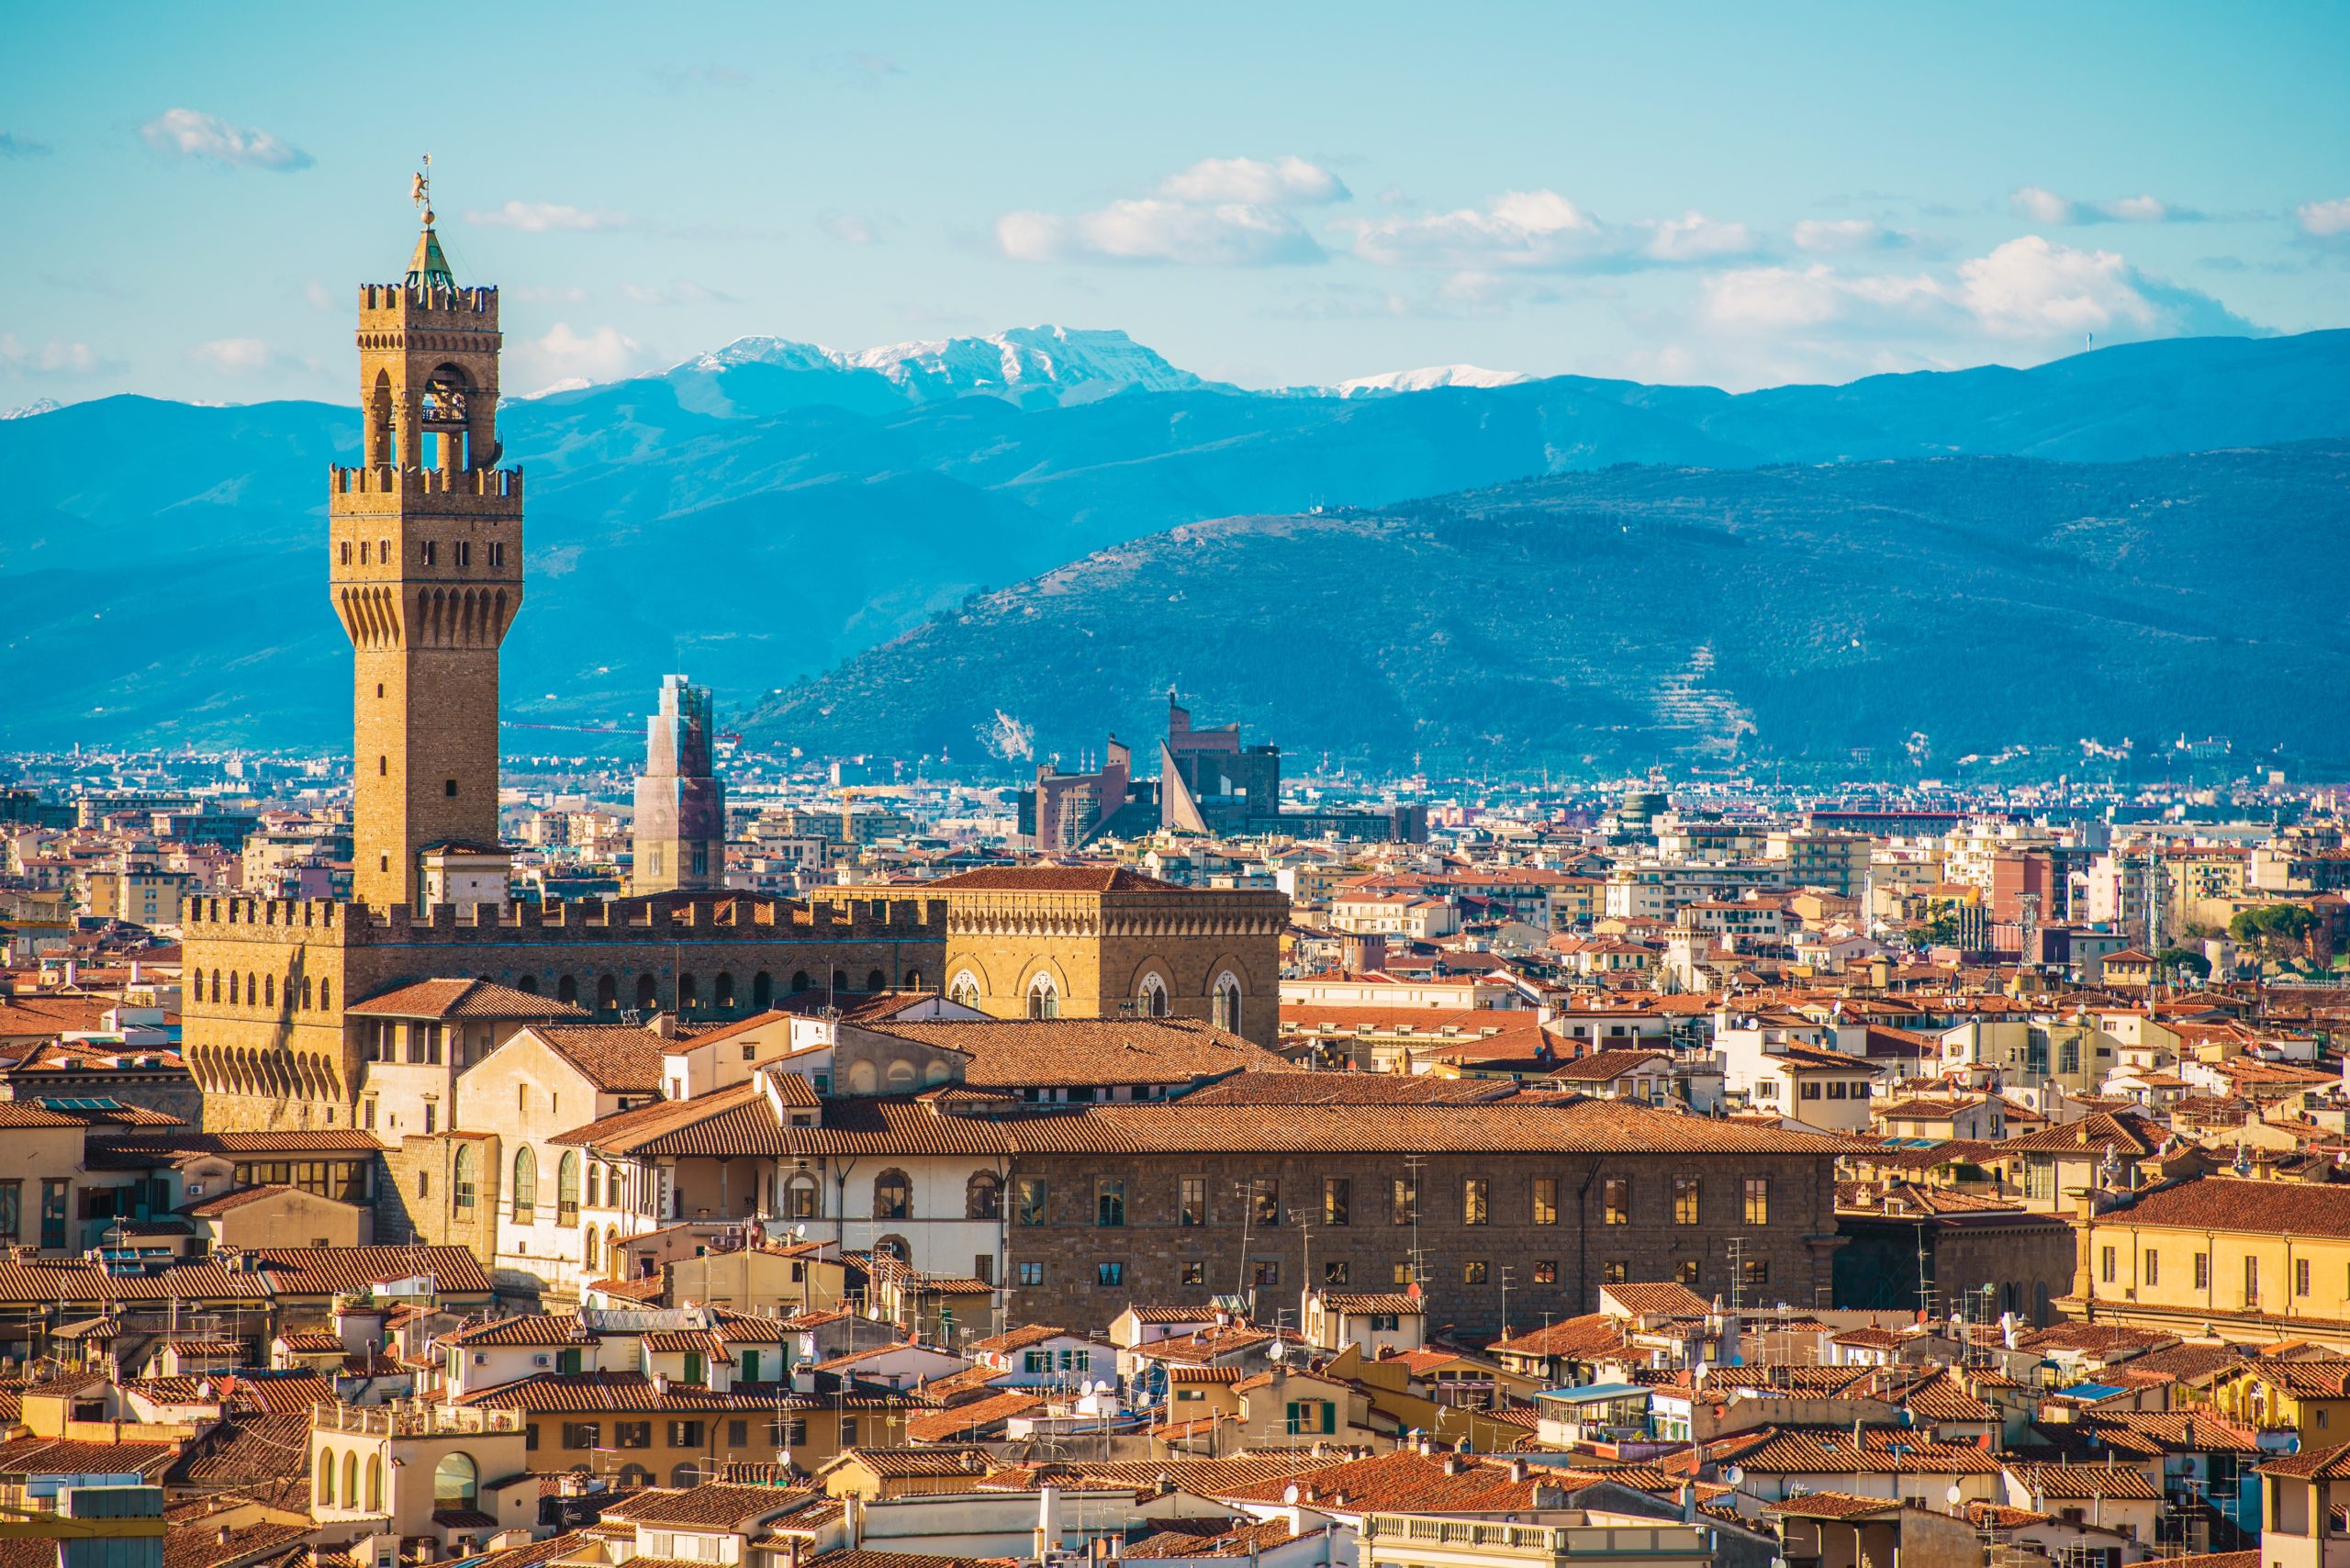 Toscany City of Florence